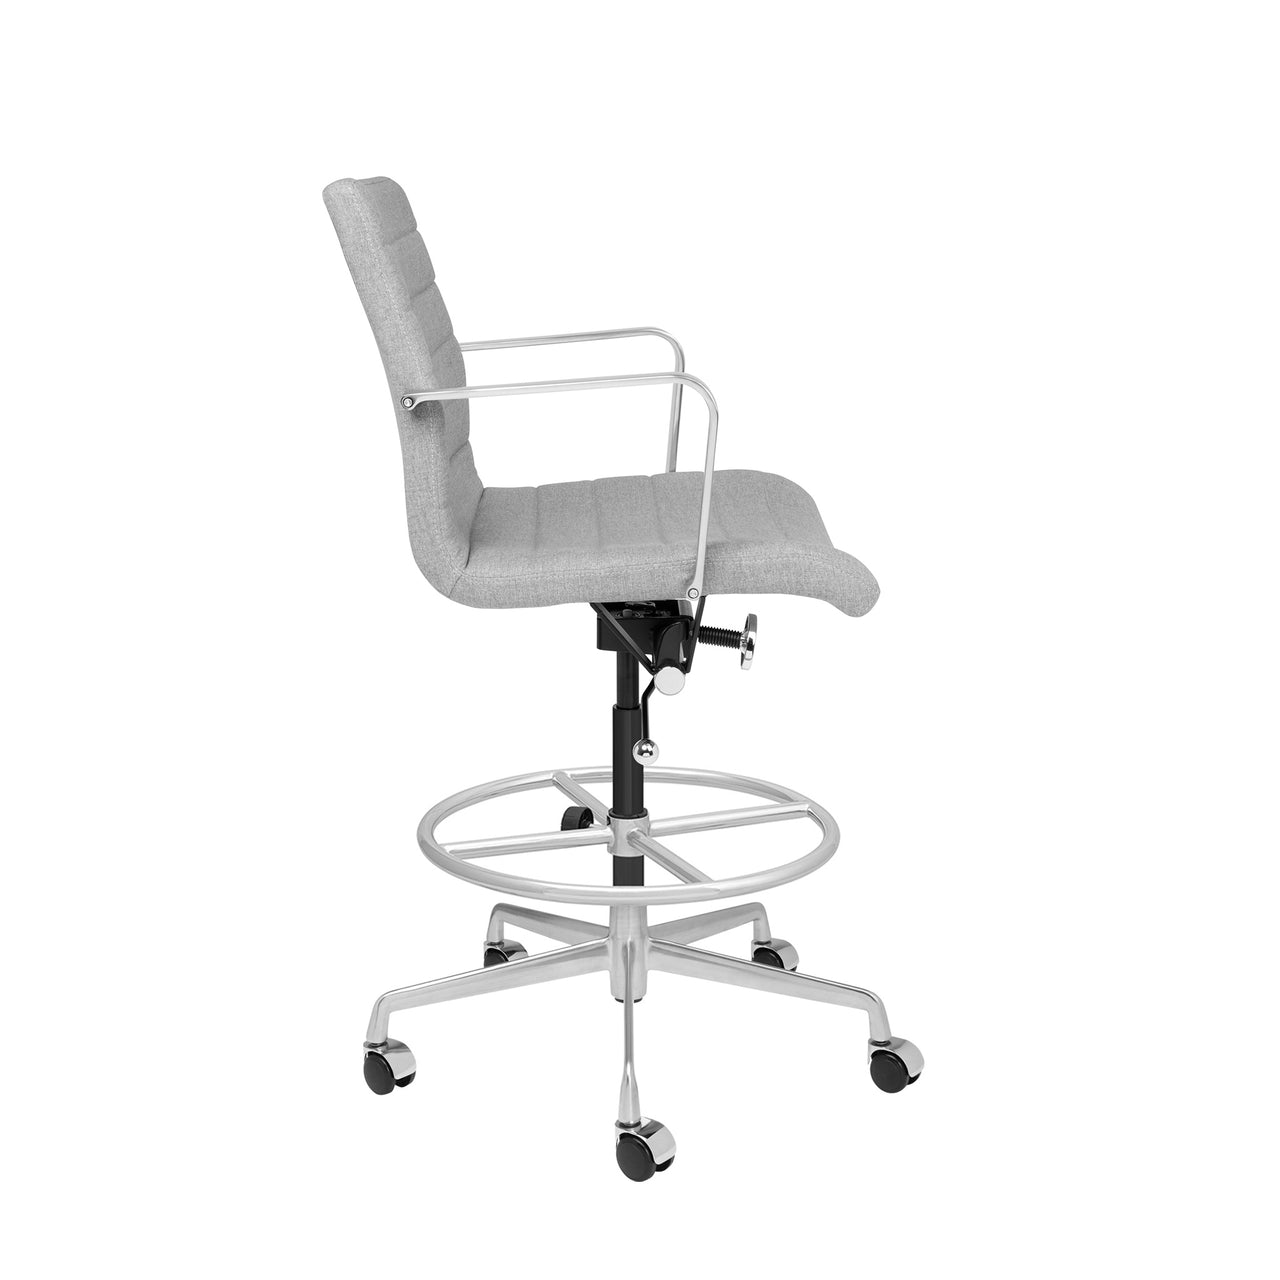 SHIPS FEB 18TH - SOHO Ribbed Drafting Chair (Grey Fabric)